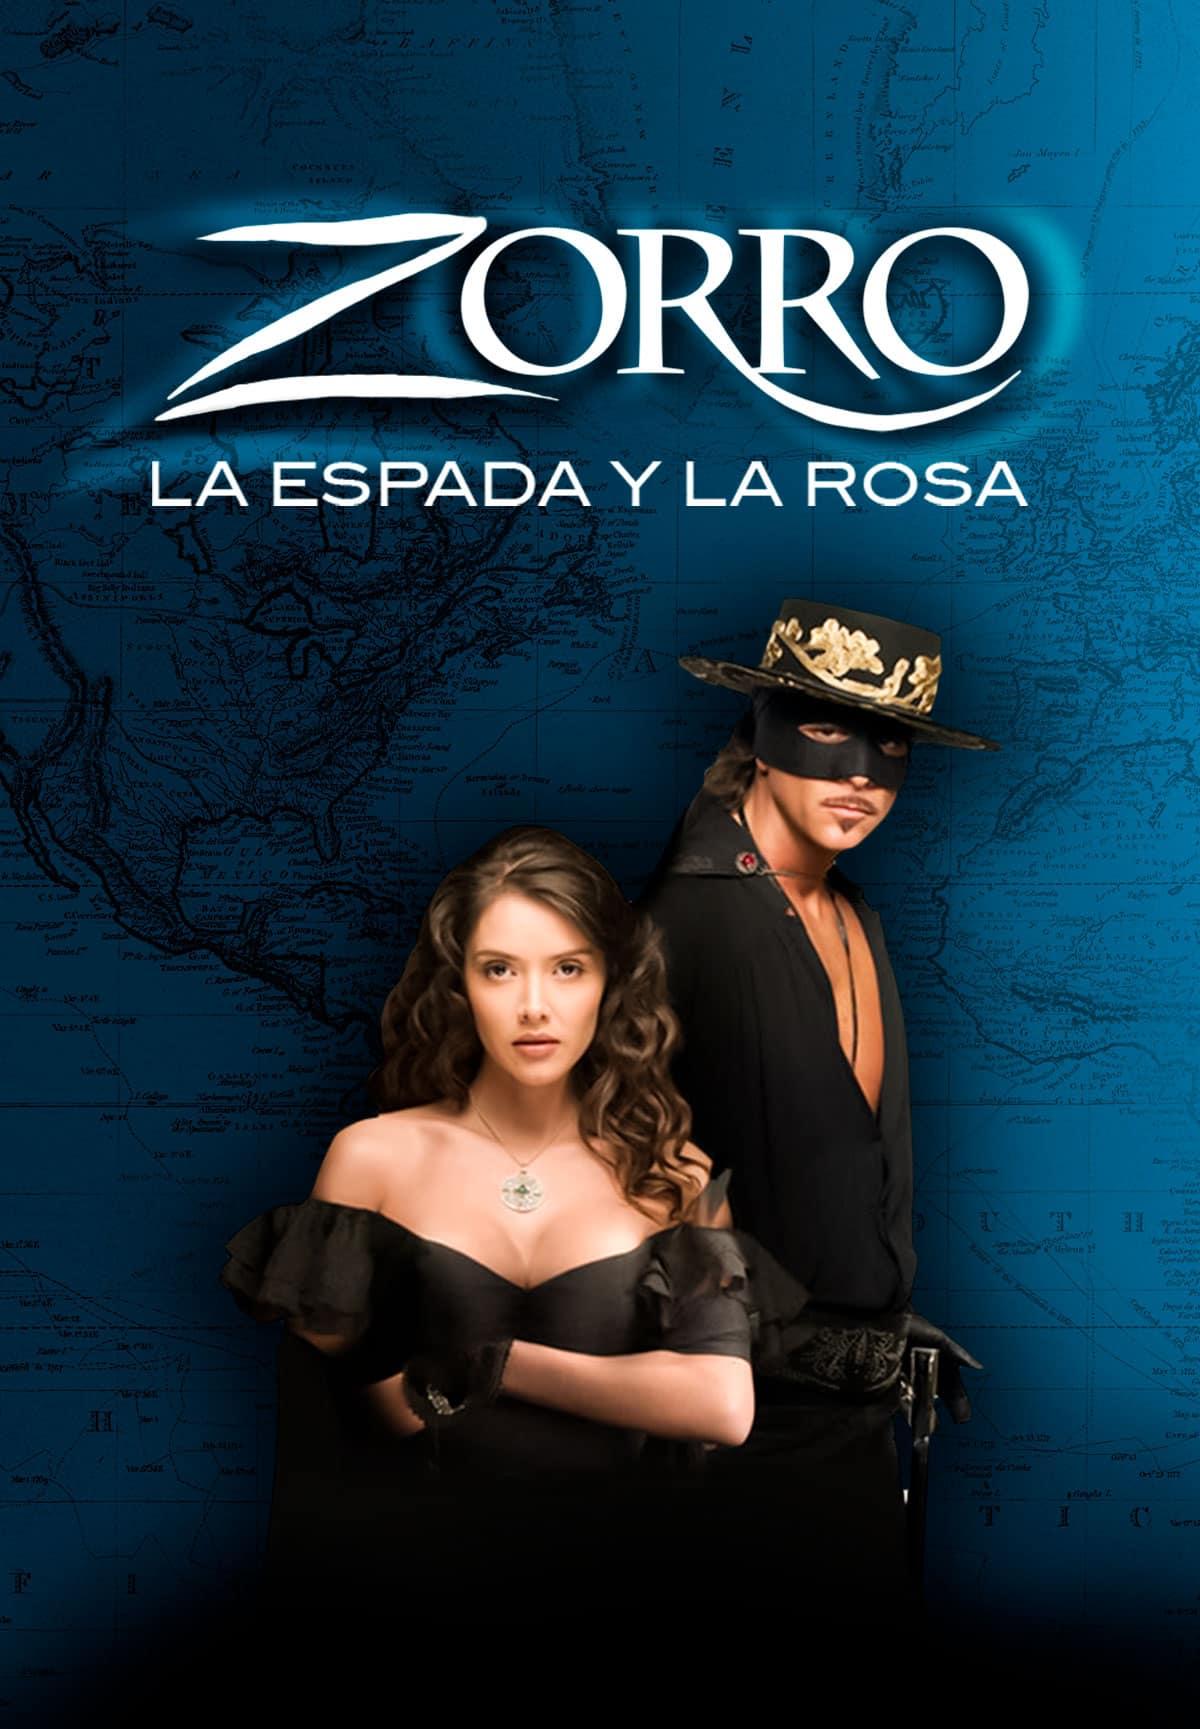 El Zorro: la espada y la rosa